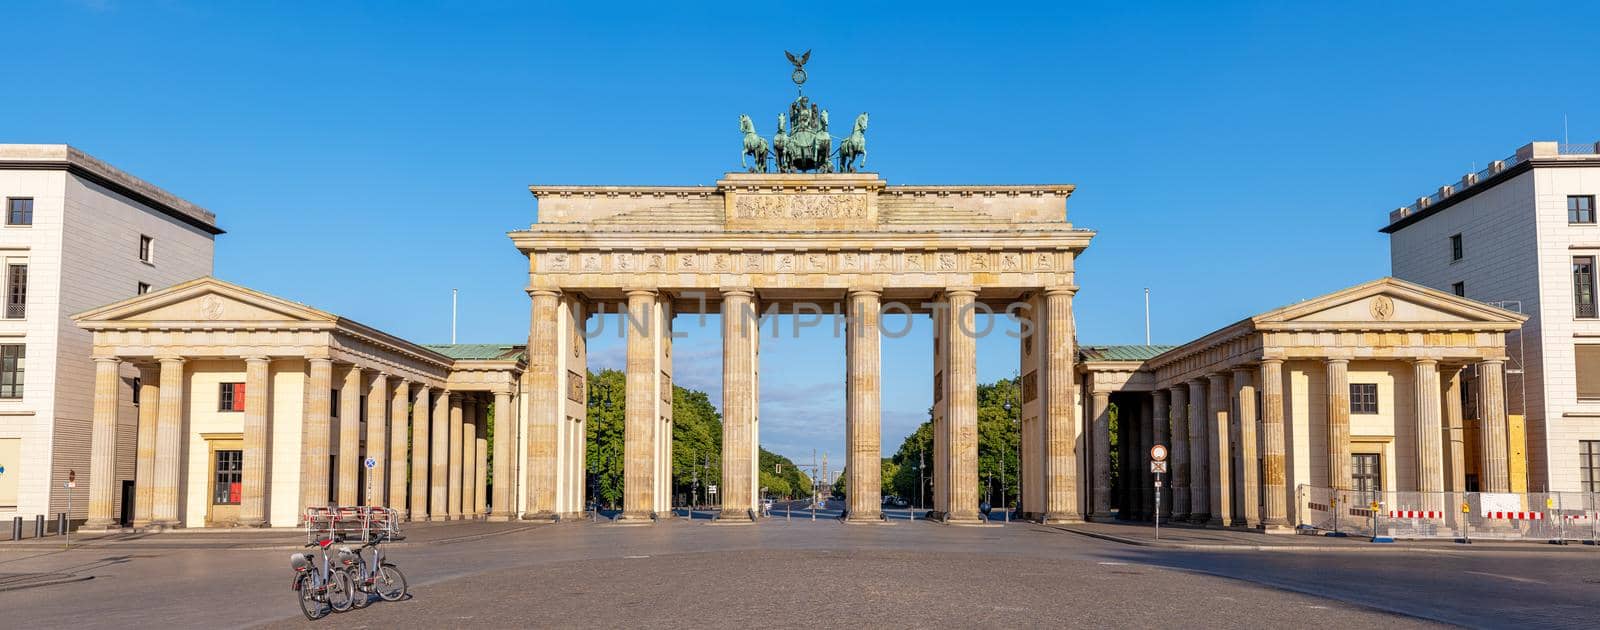 Panorama of the Brandenburg Gate in Berlin by elxeneize